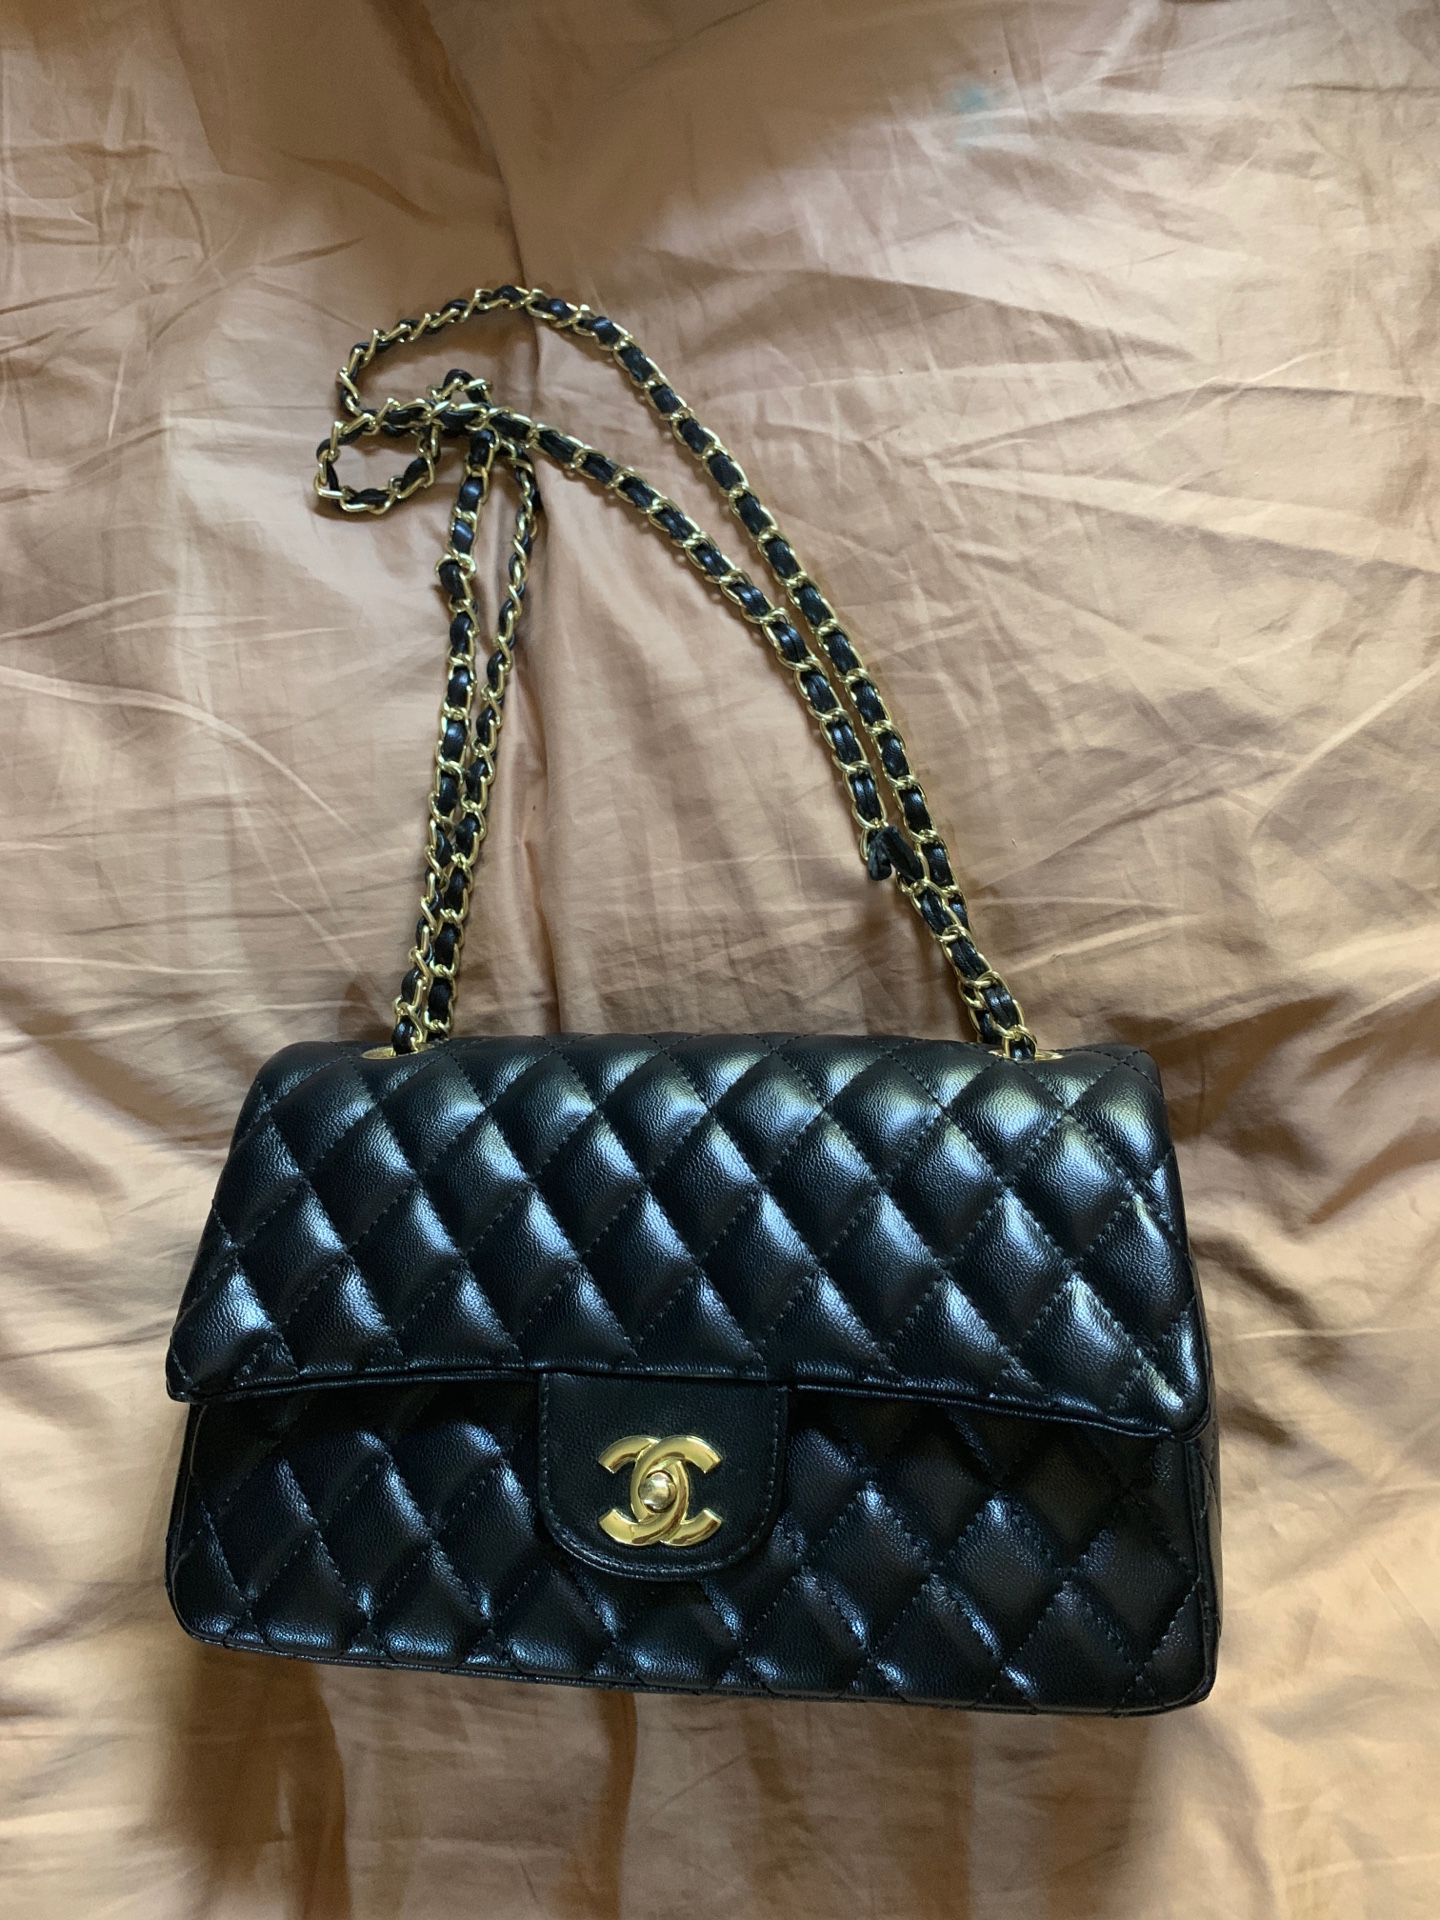 Chanel black bag